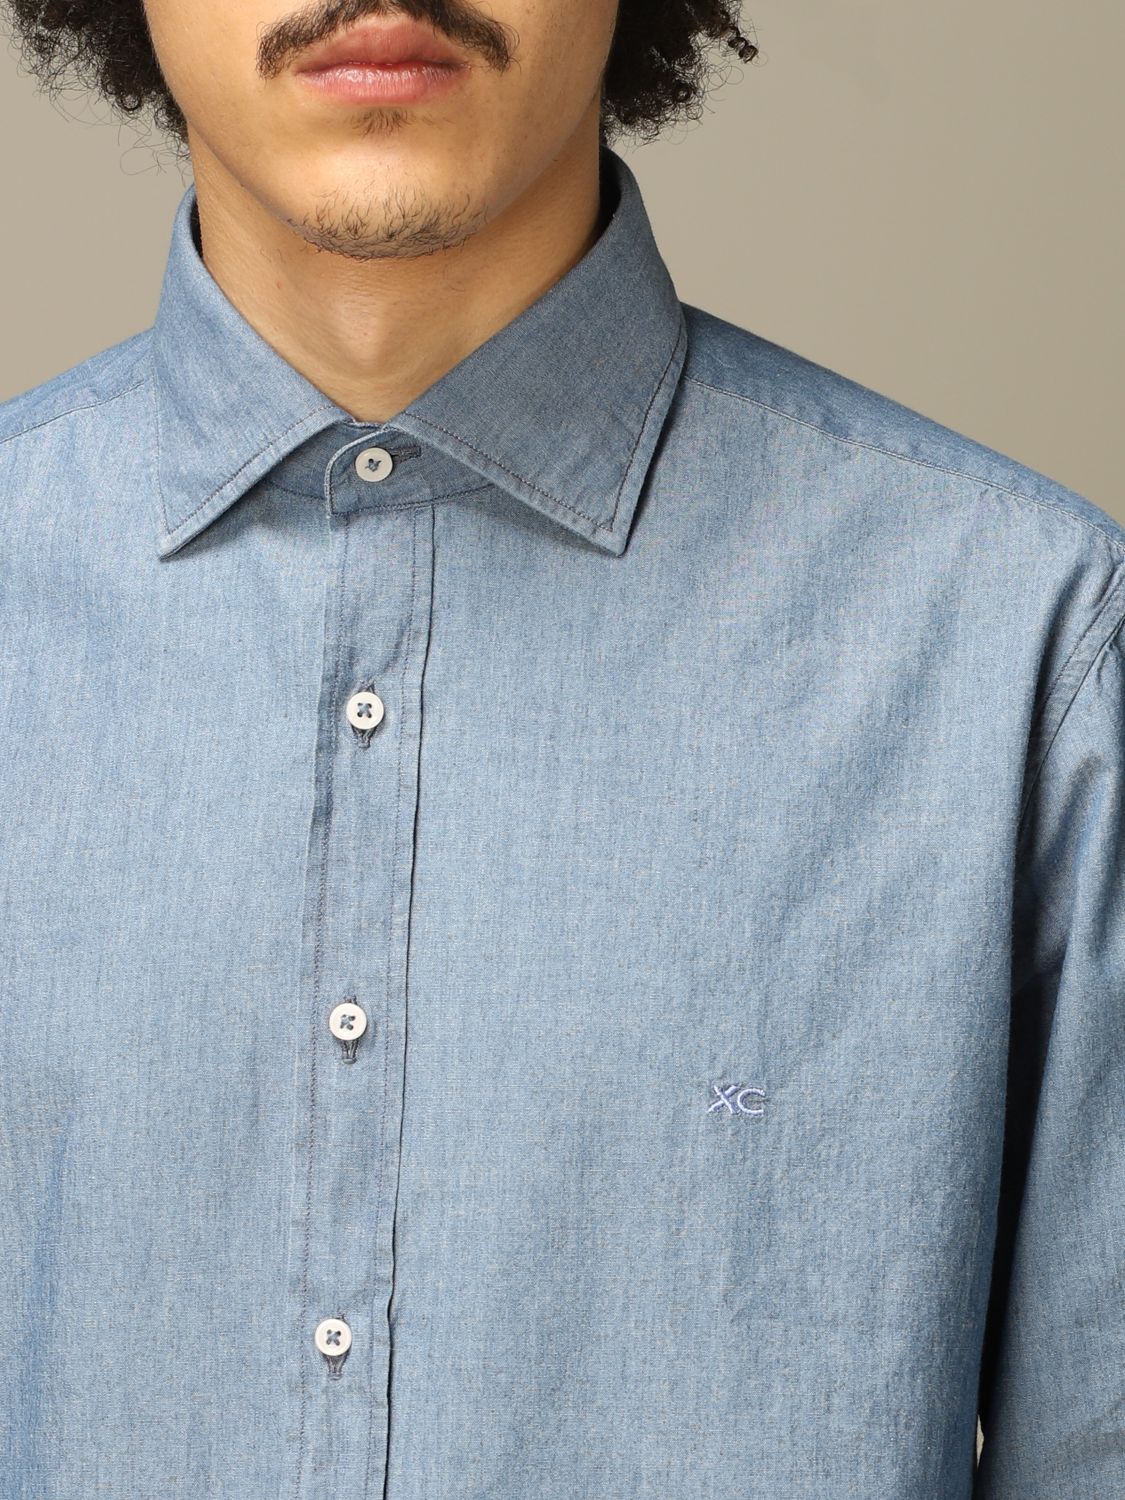 Xc Outlet: shirt for man - Blue | Xc shirt DP2L 2G CART J online on